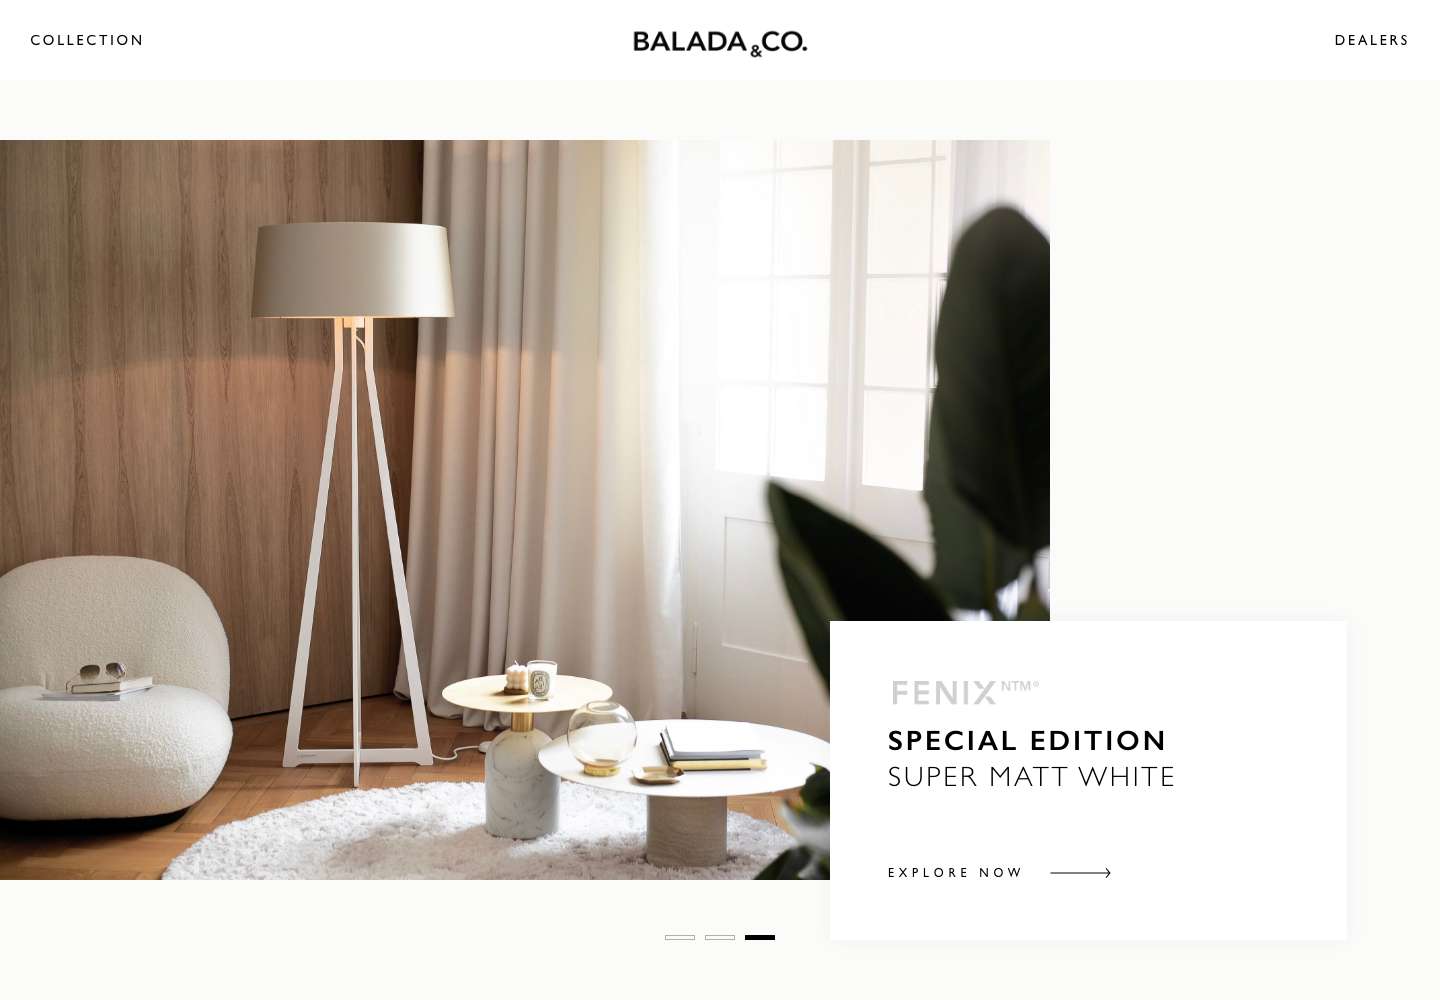 Balada&co website design concept by JW Designer - Luxury German lighting and luminaire company